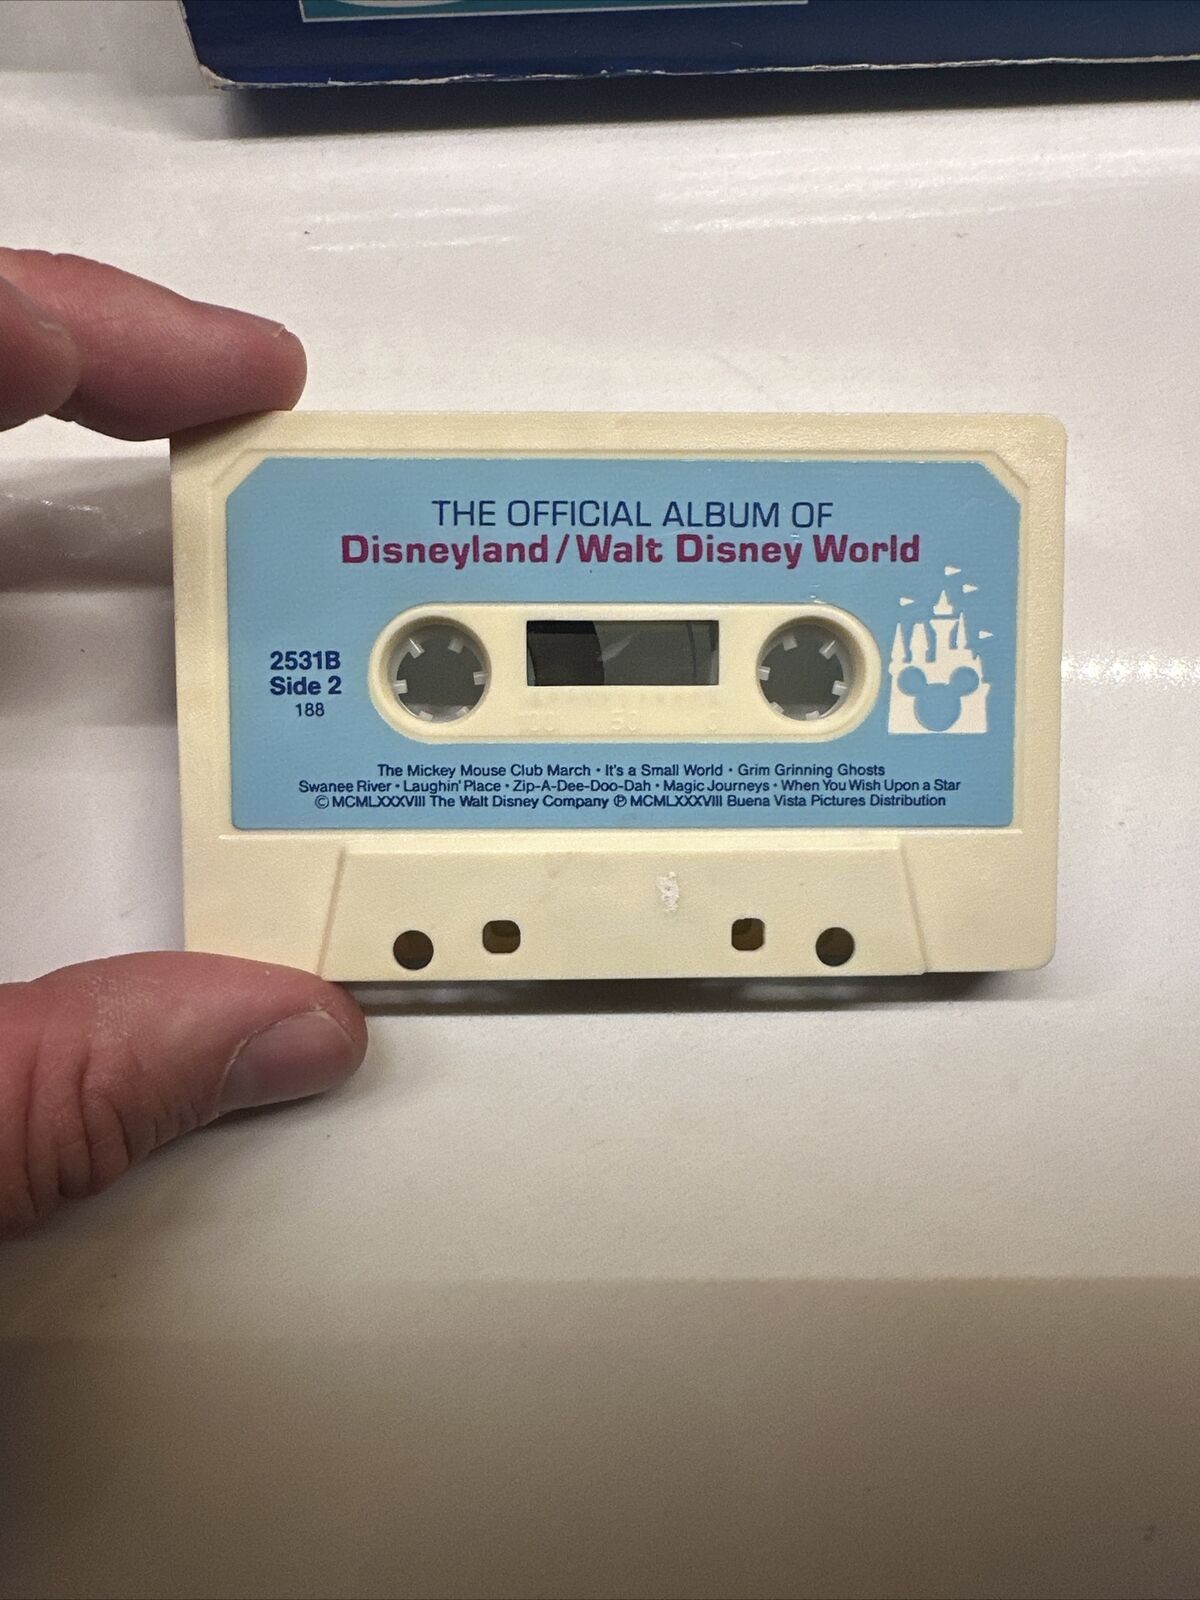 Vintage 1988 The Official Album of Disneyland/Walt Disney World Cassette Tape